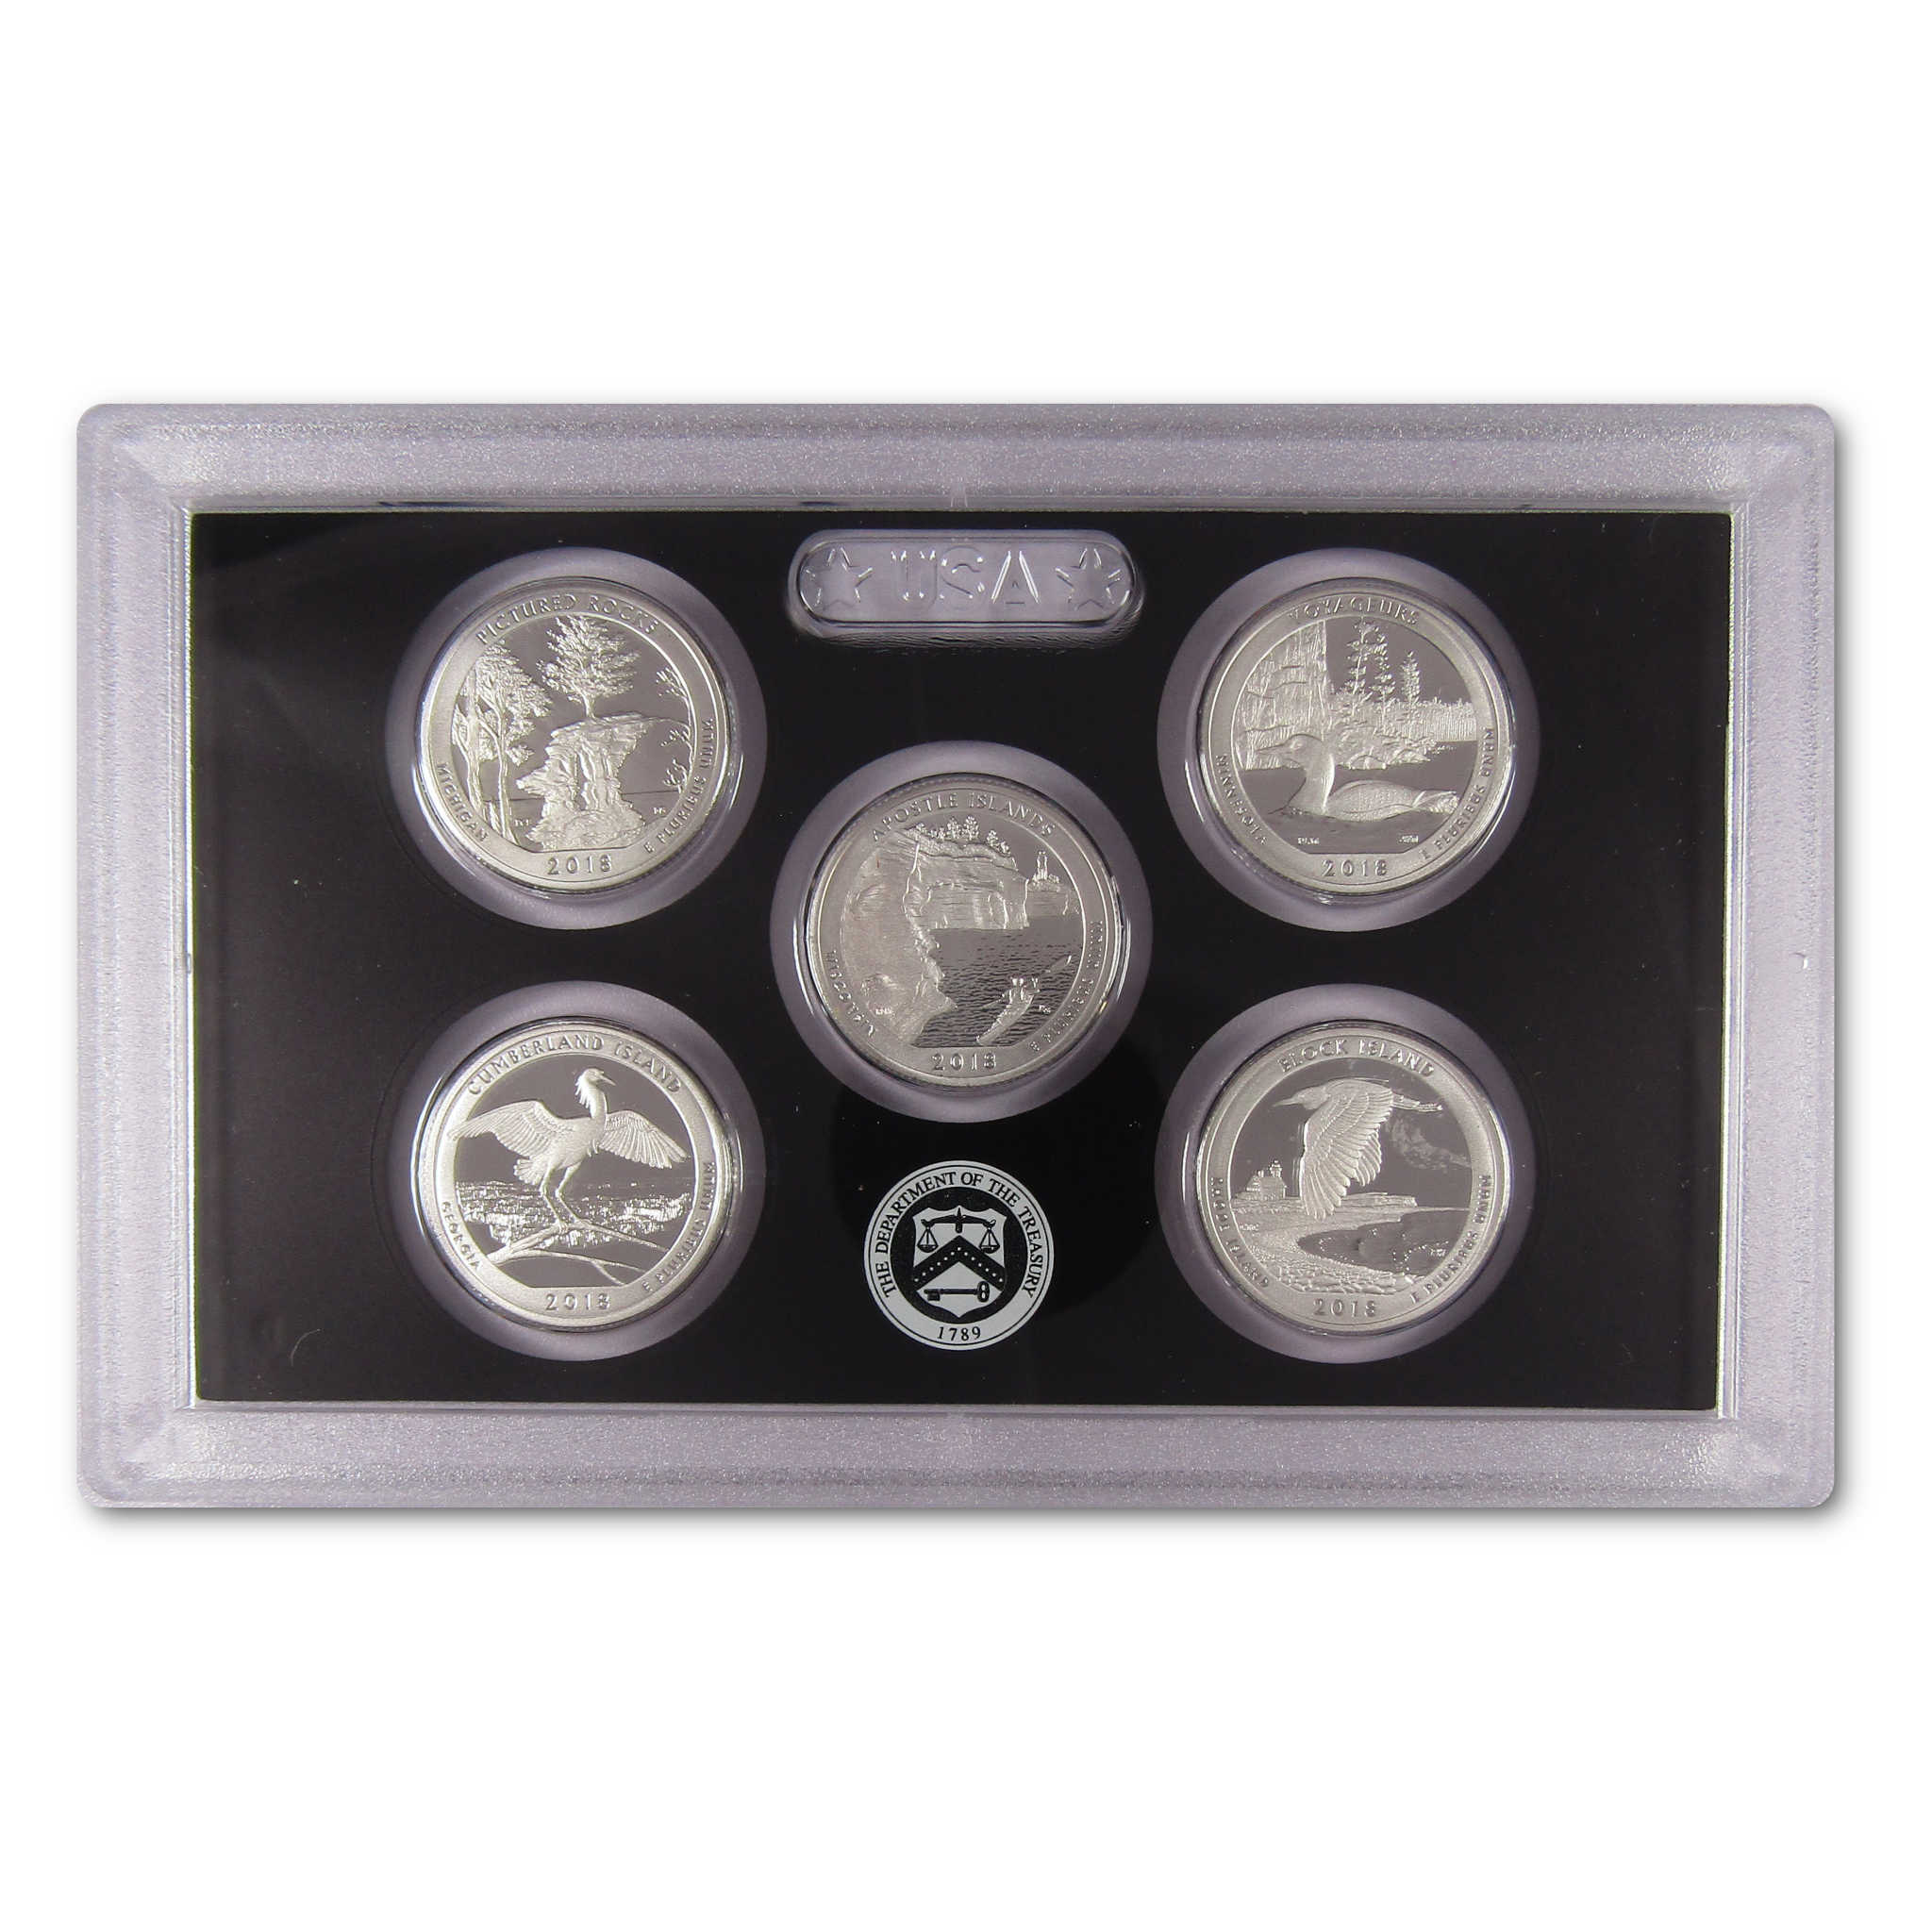 2018 America the Beautiful Quarter Silver Proof Set U.S. Mint OGP COA